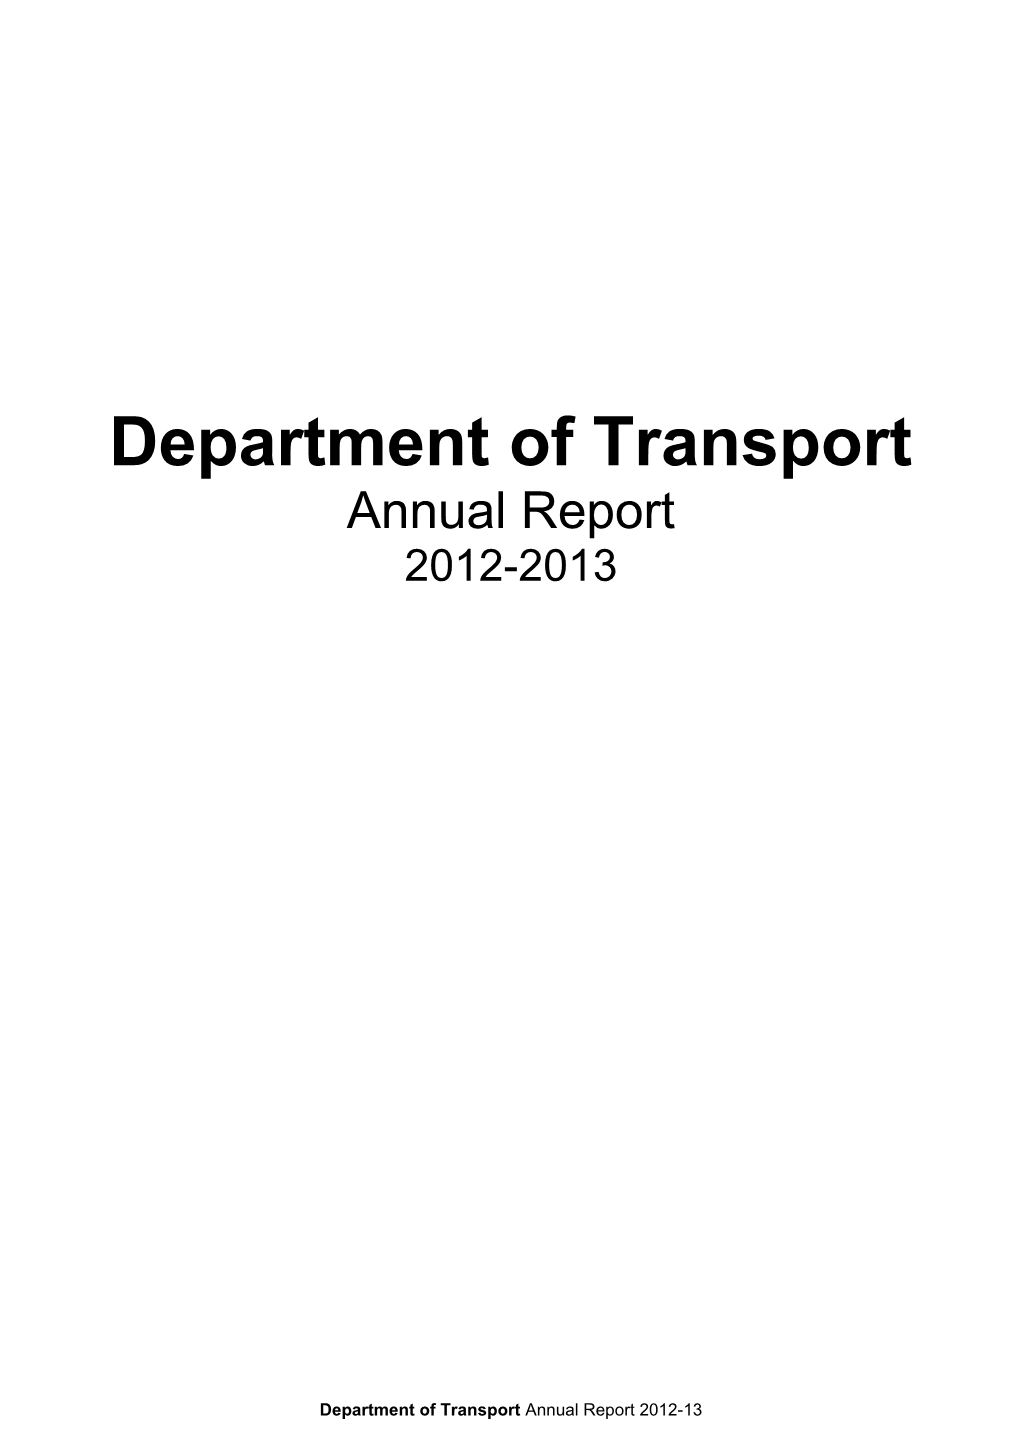 Department of Transport Annual Report 2012-2013